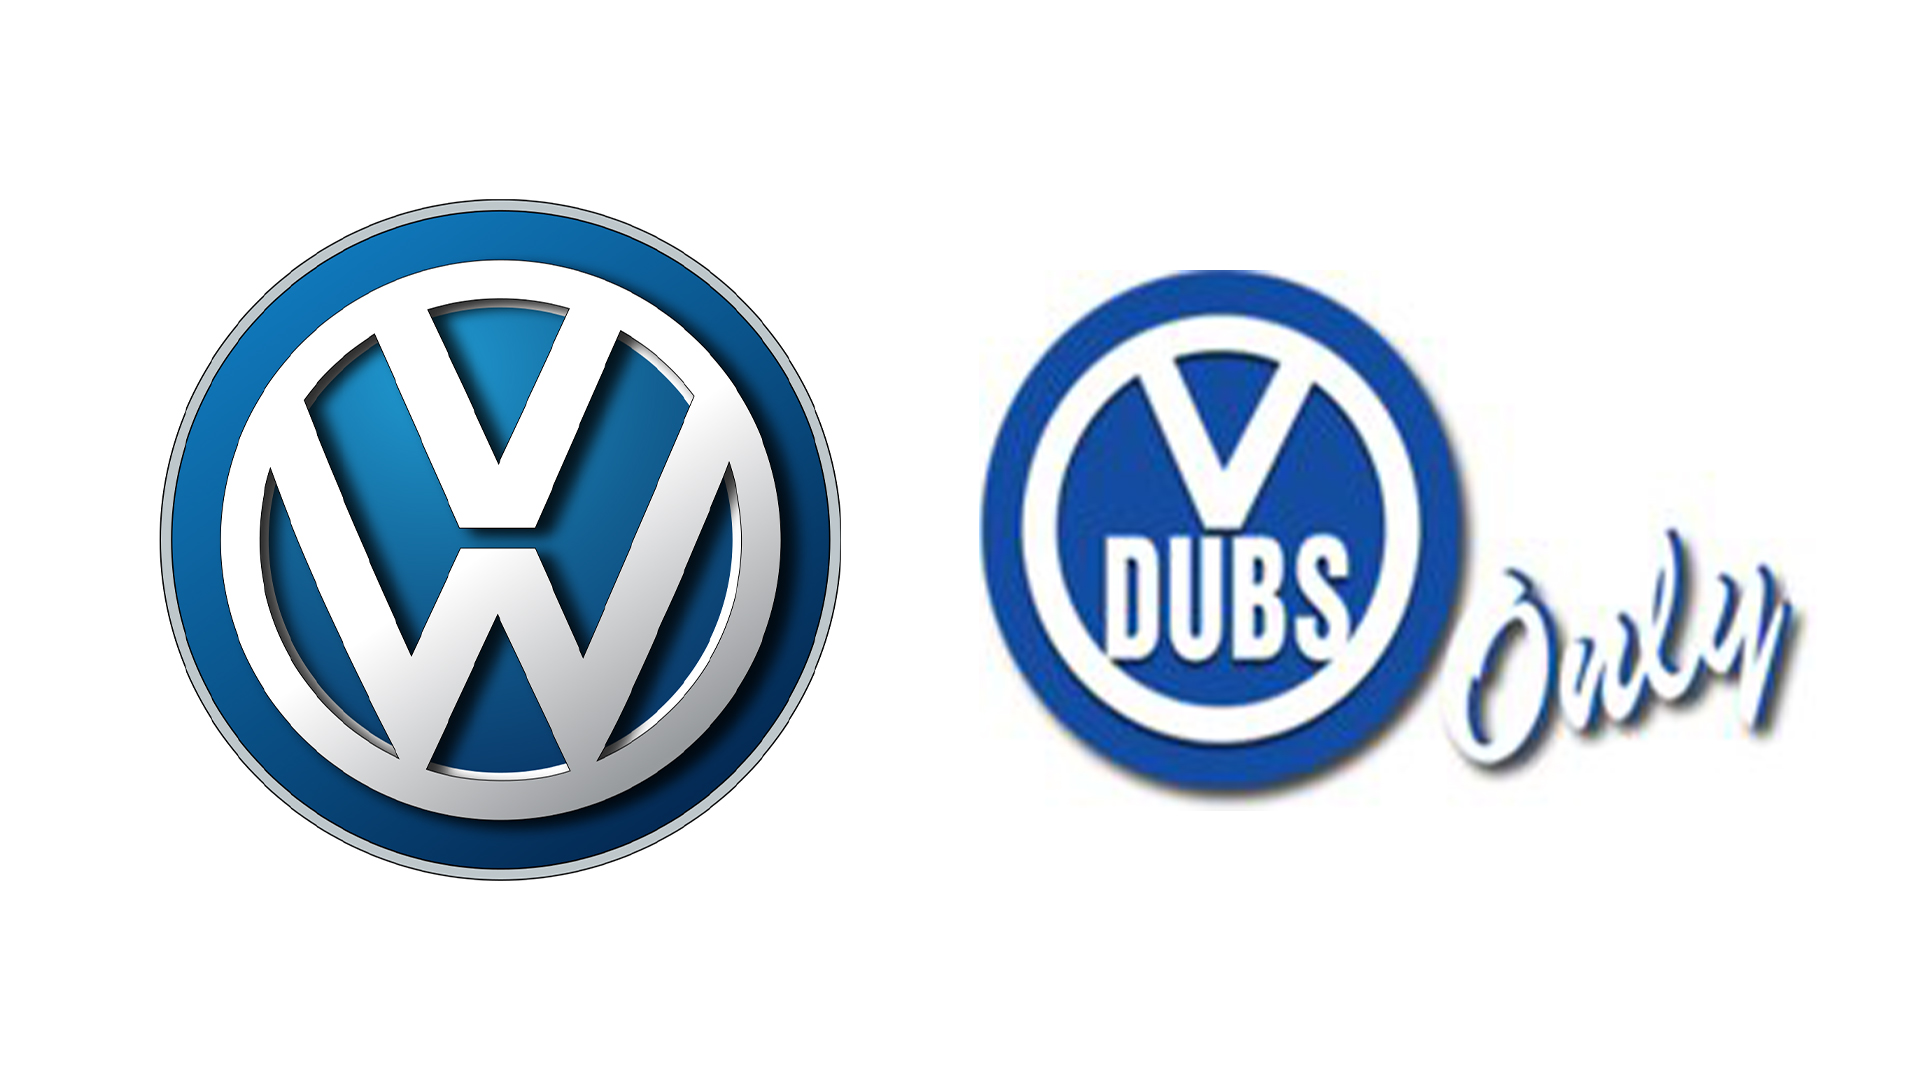 Volkswagen logo vs Vdubs only logo